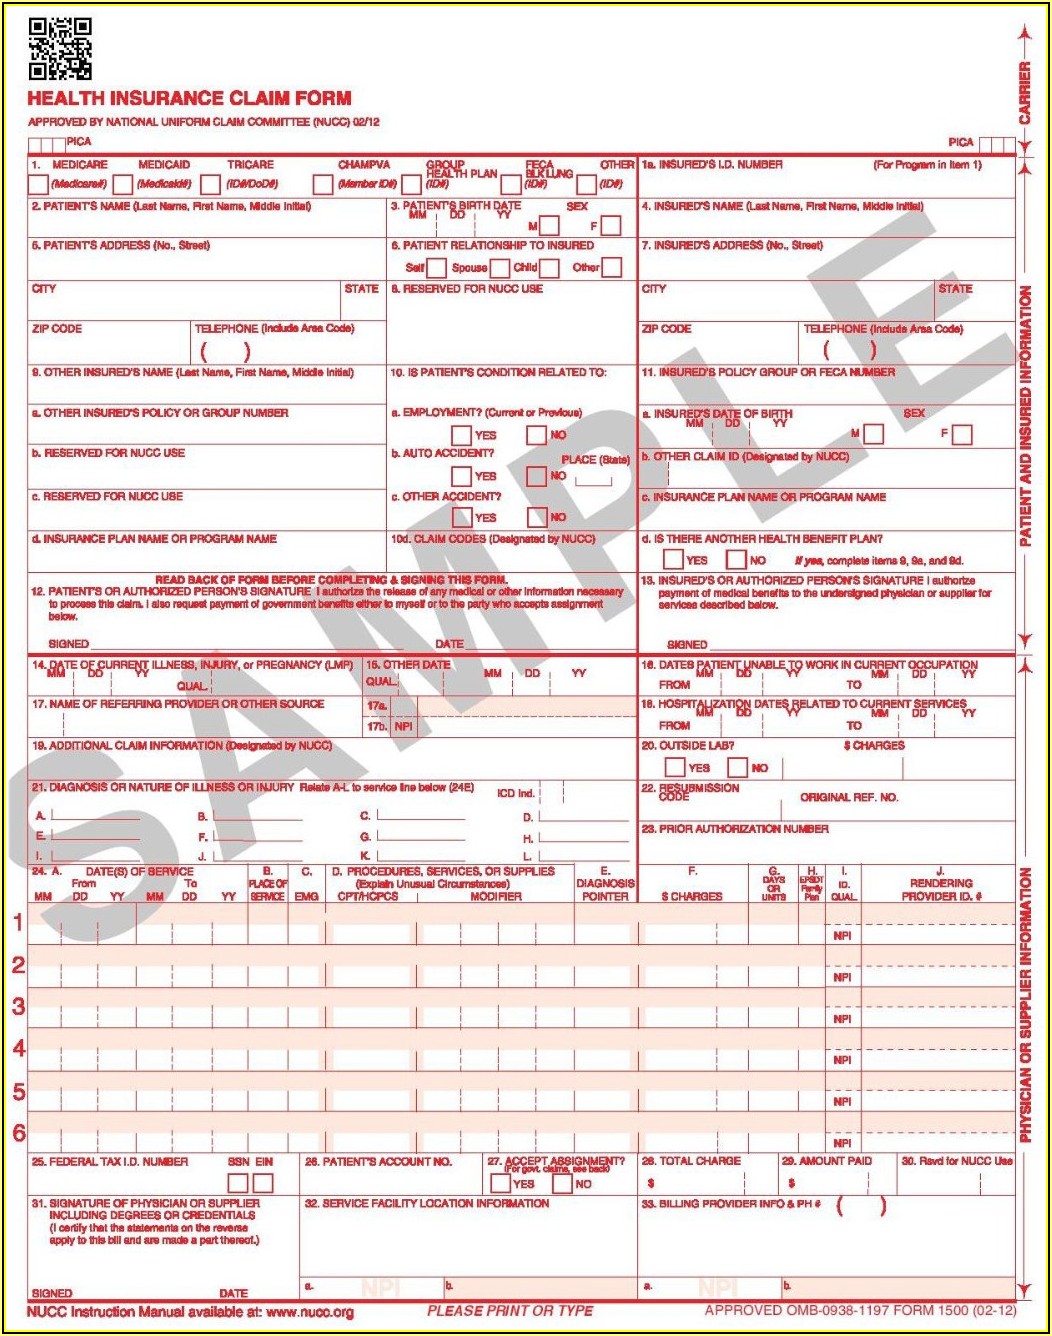 Cms (hcfa) 1500 And Ub 92ub 04 Medical Claim Forms